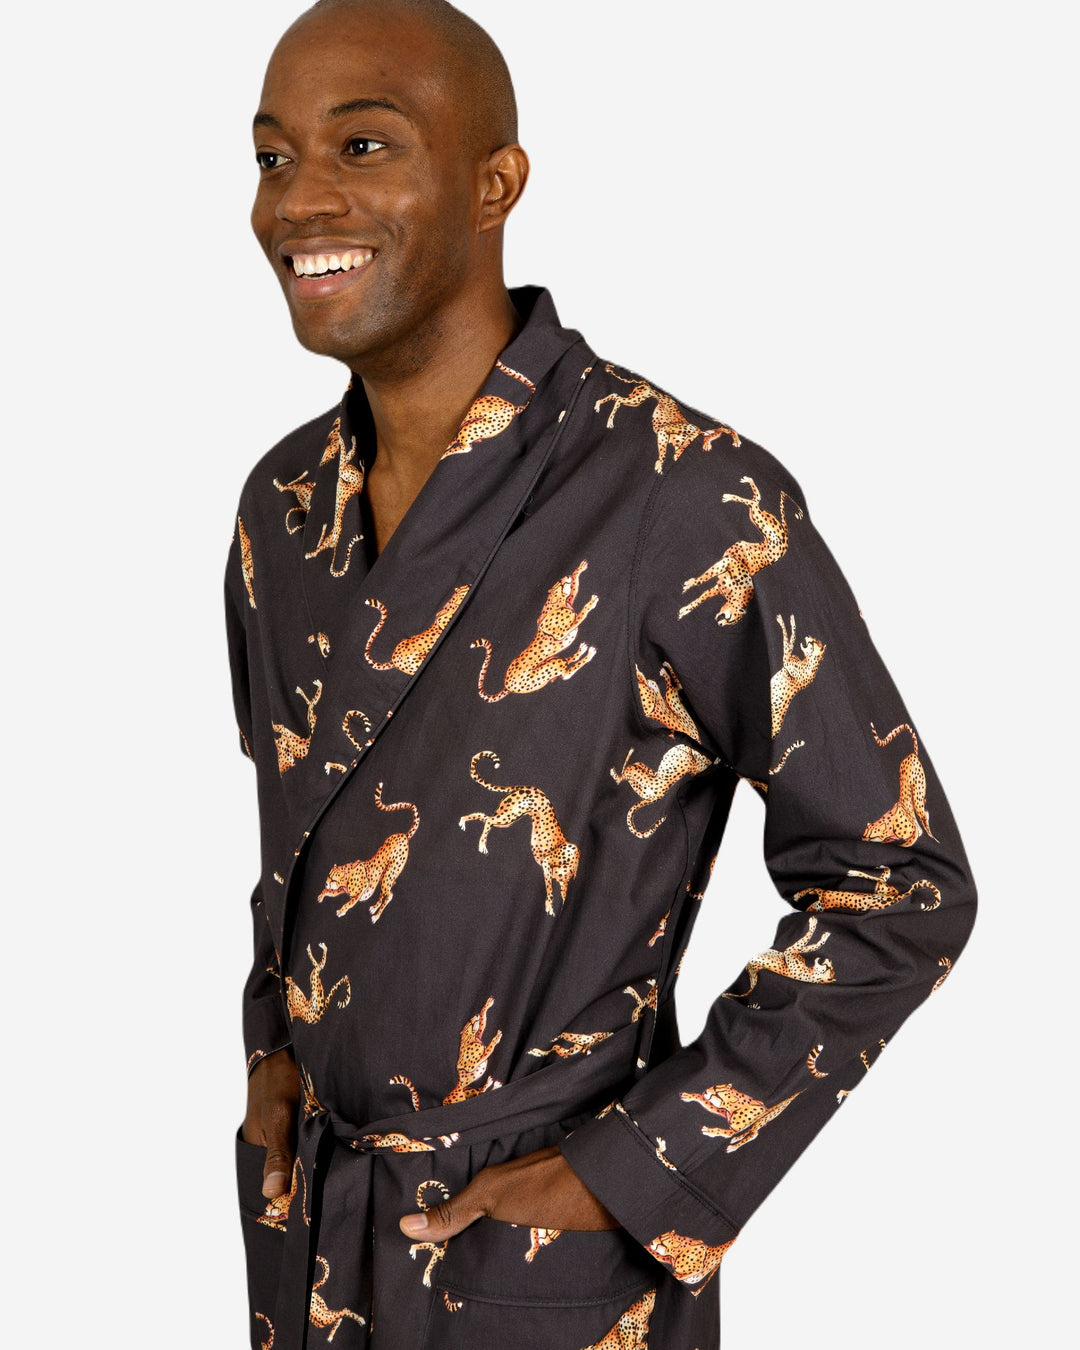 Black mens dressing gown - jumping cheetah